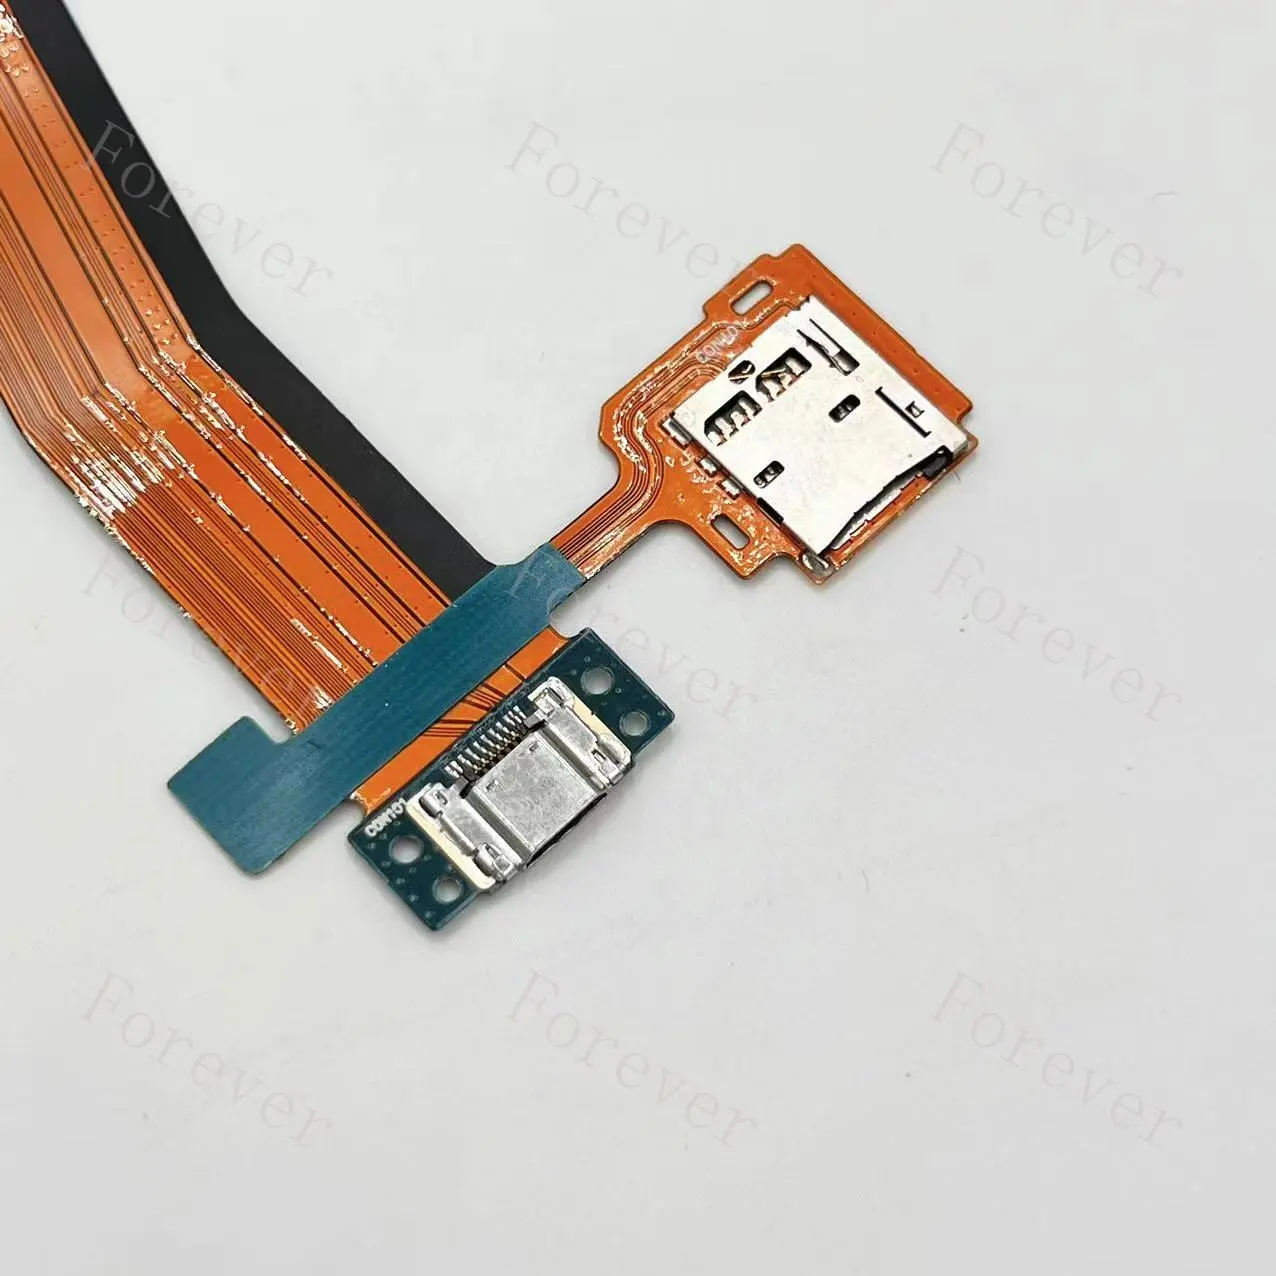 A Parts for Samsung P5210 (1.1) P5210 (1.0) T805 USB Dock Connector Charging Port Flex Cable USB Charger Plug Repair Parts